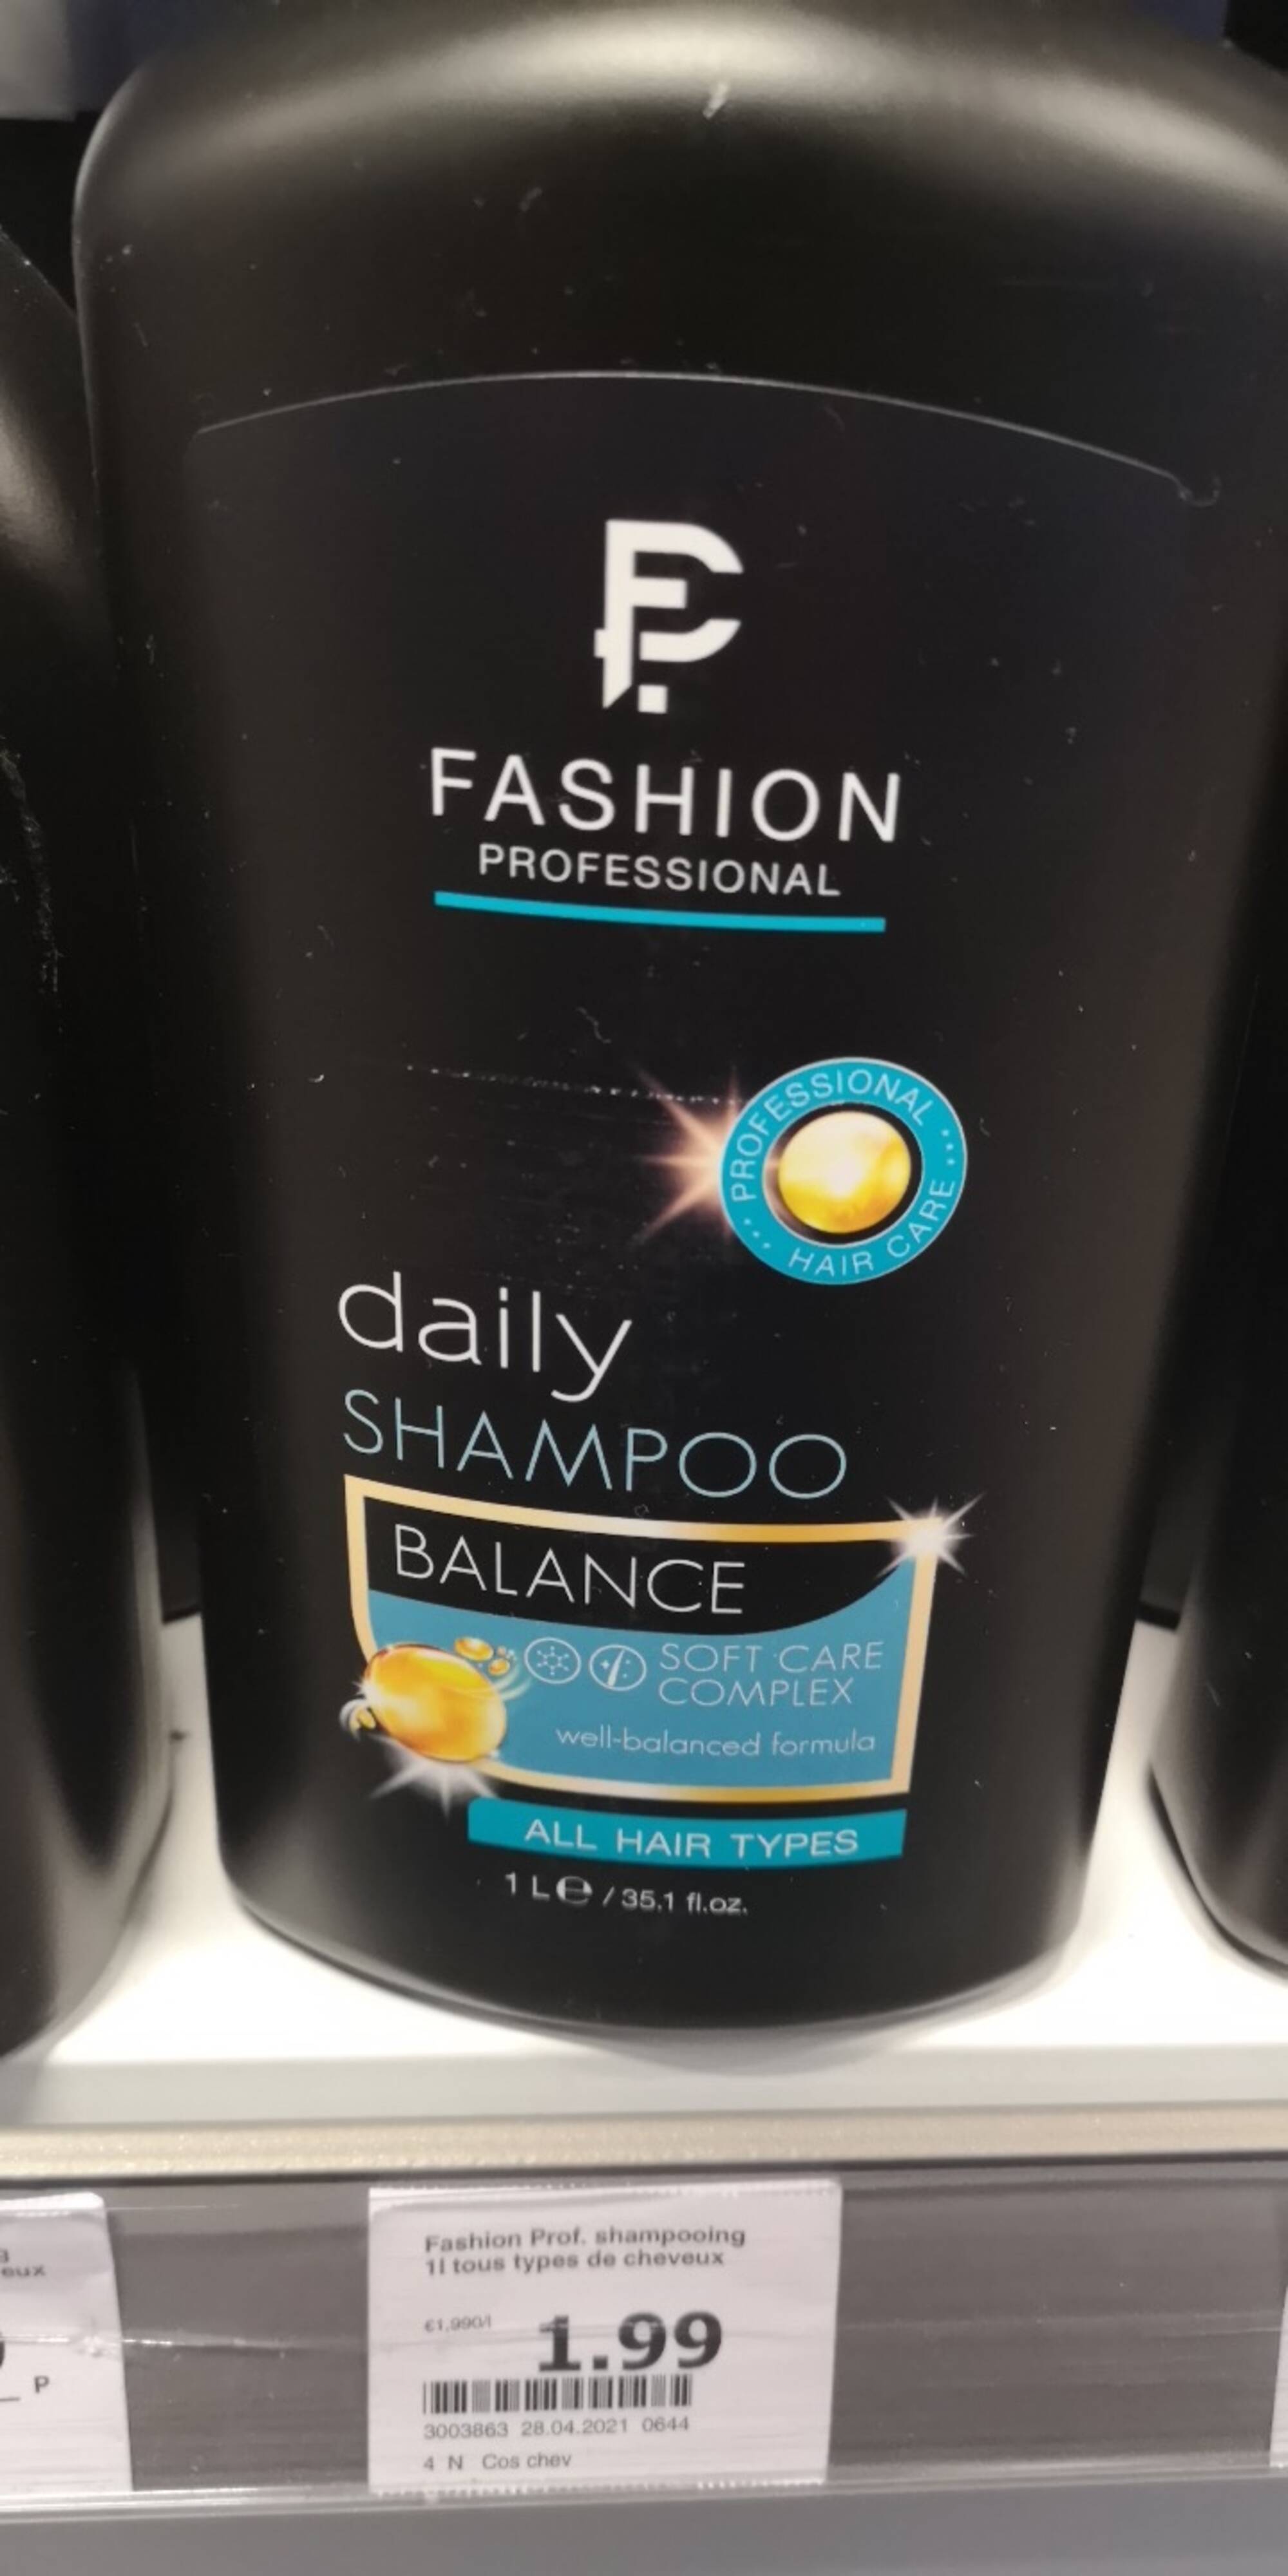 FASHION PROFESSIONAL - Daily shampoo balance